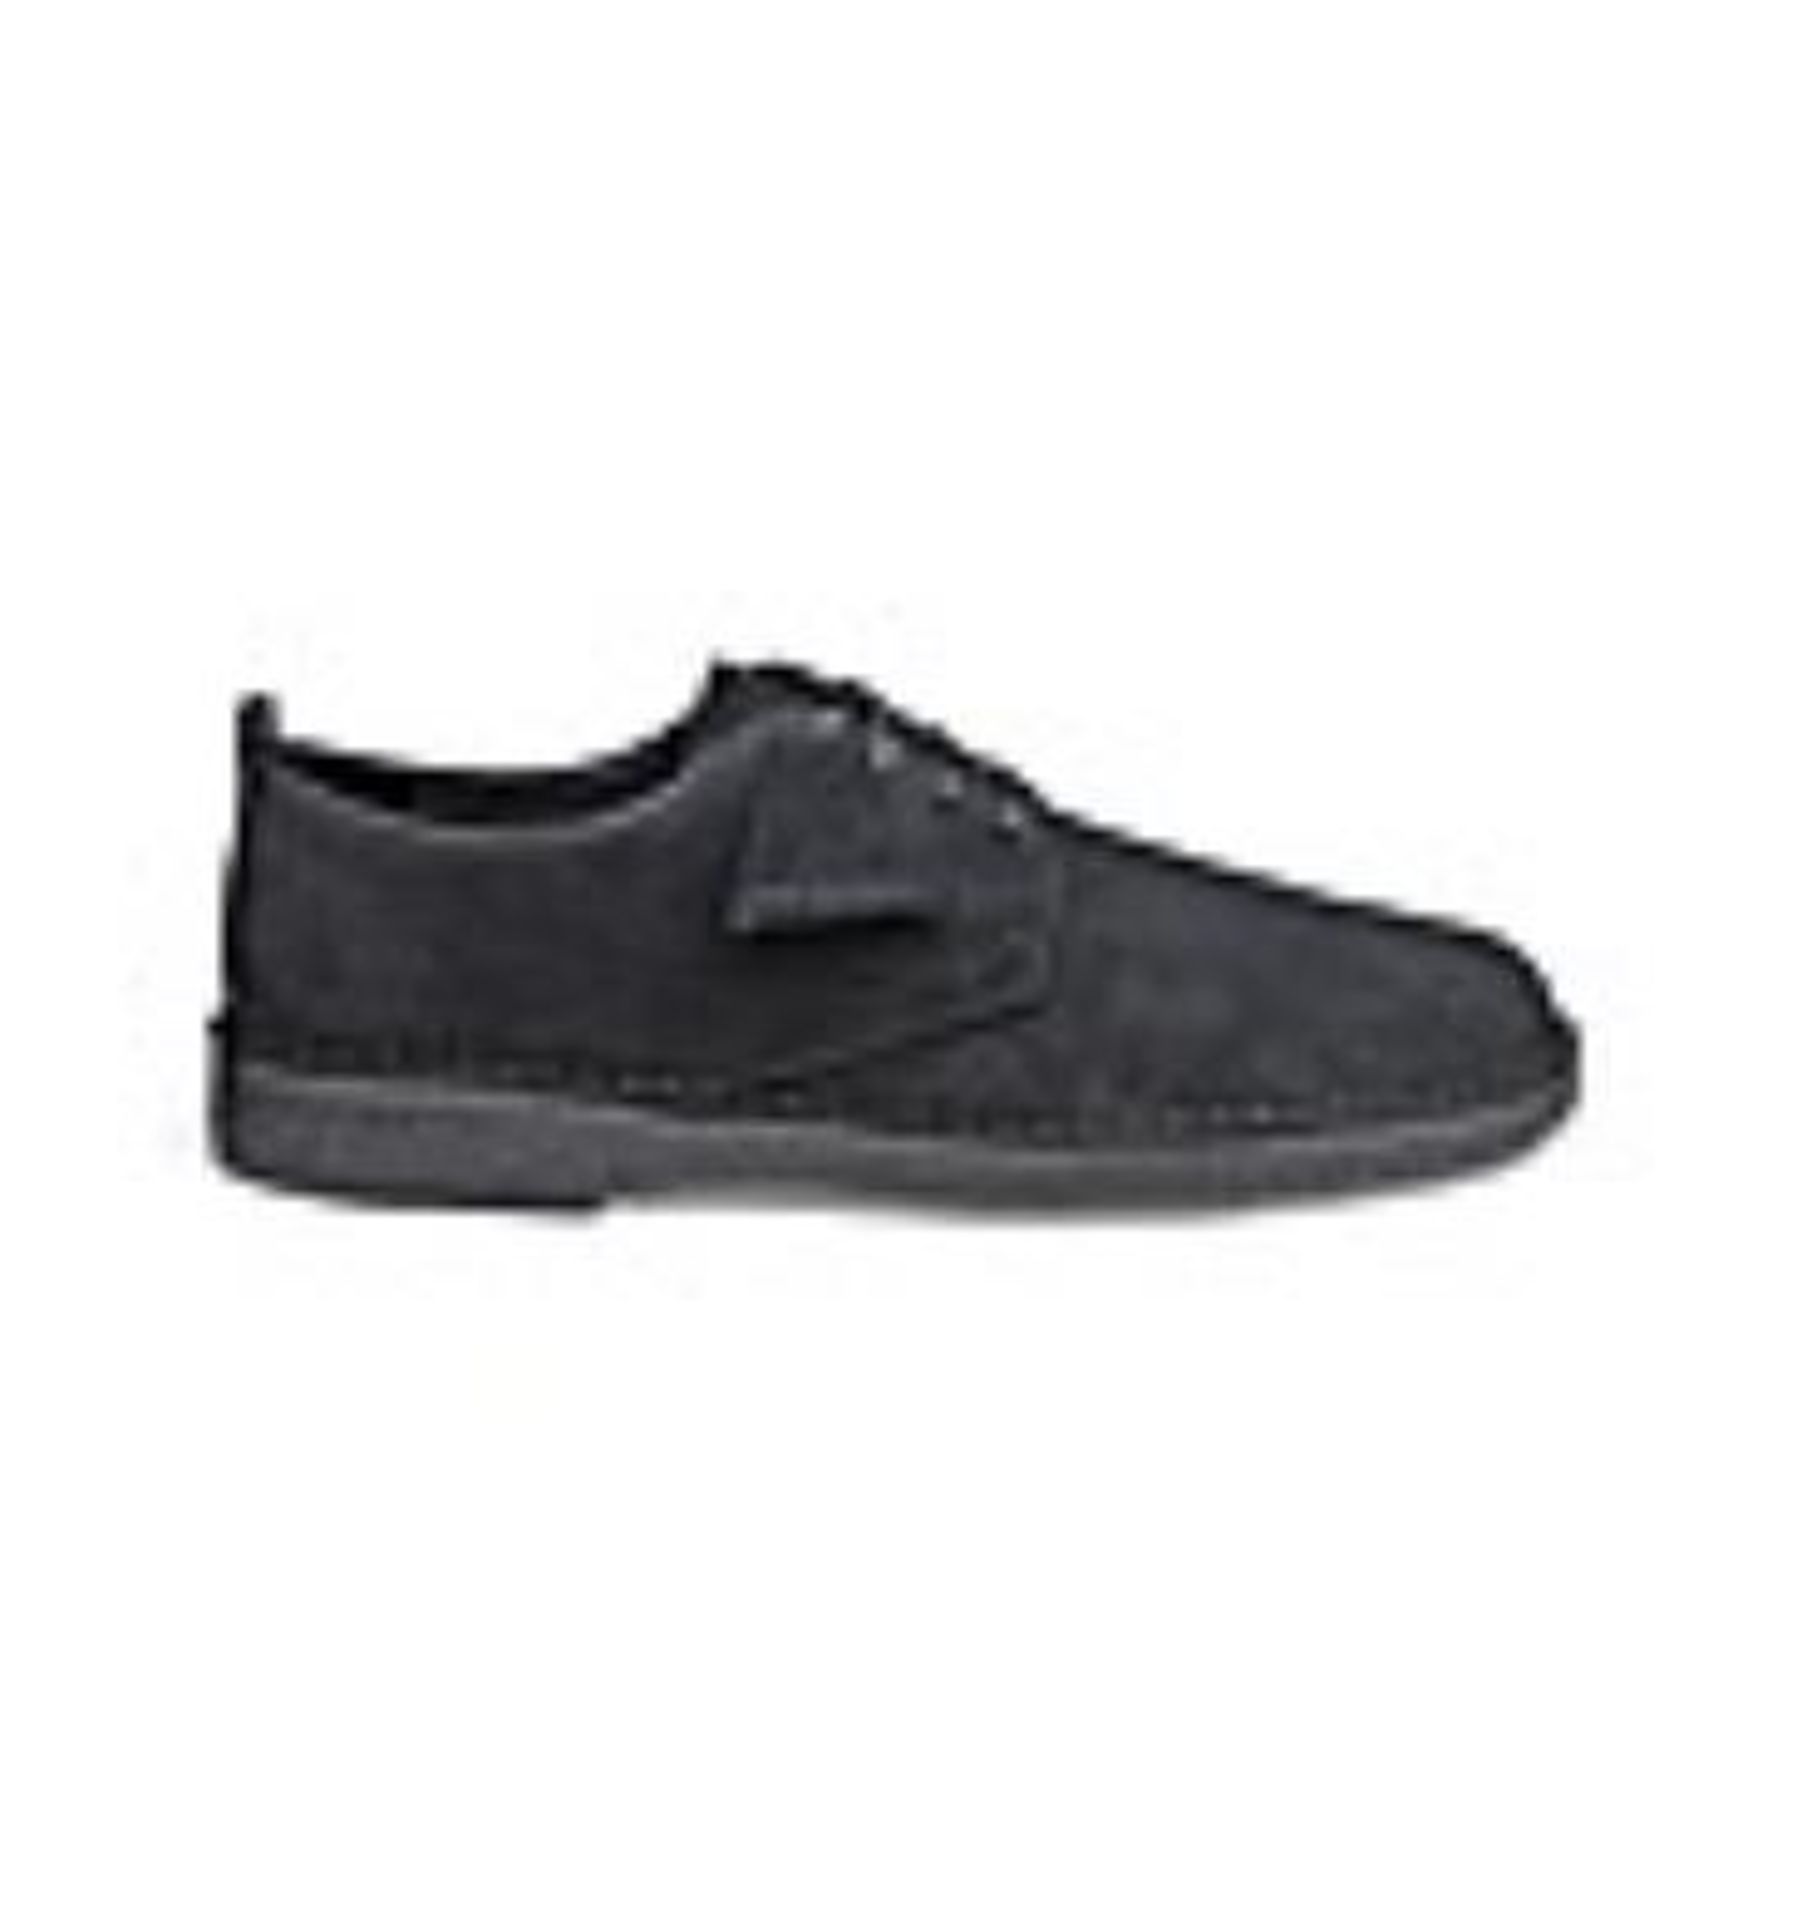 + VAT Brand New Pair Gents Clarks London Suede Shoes Black Size 7